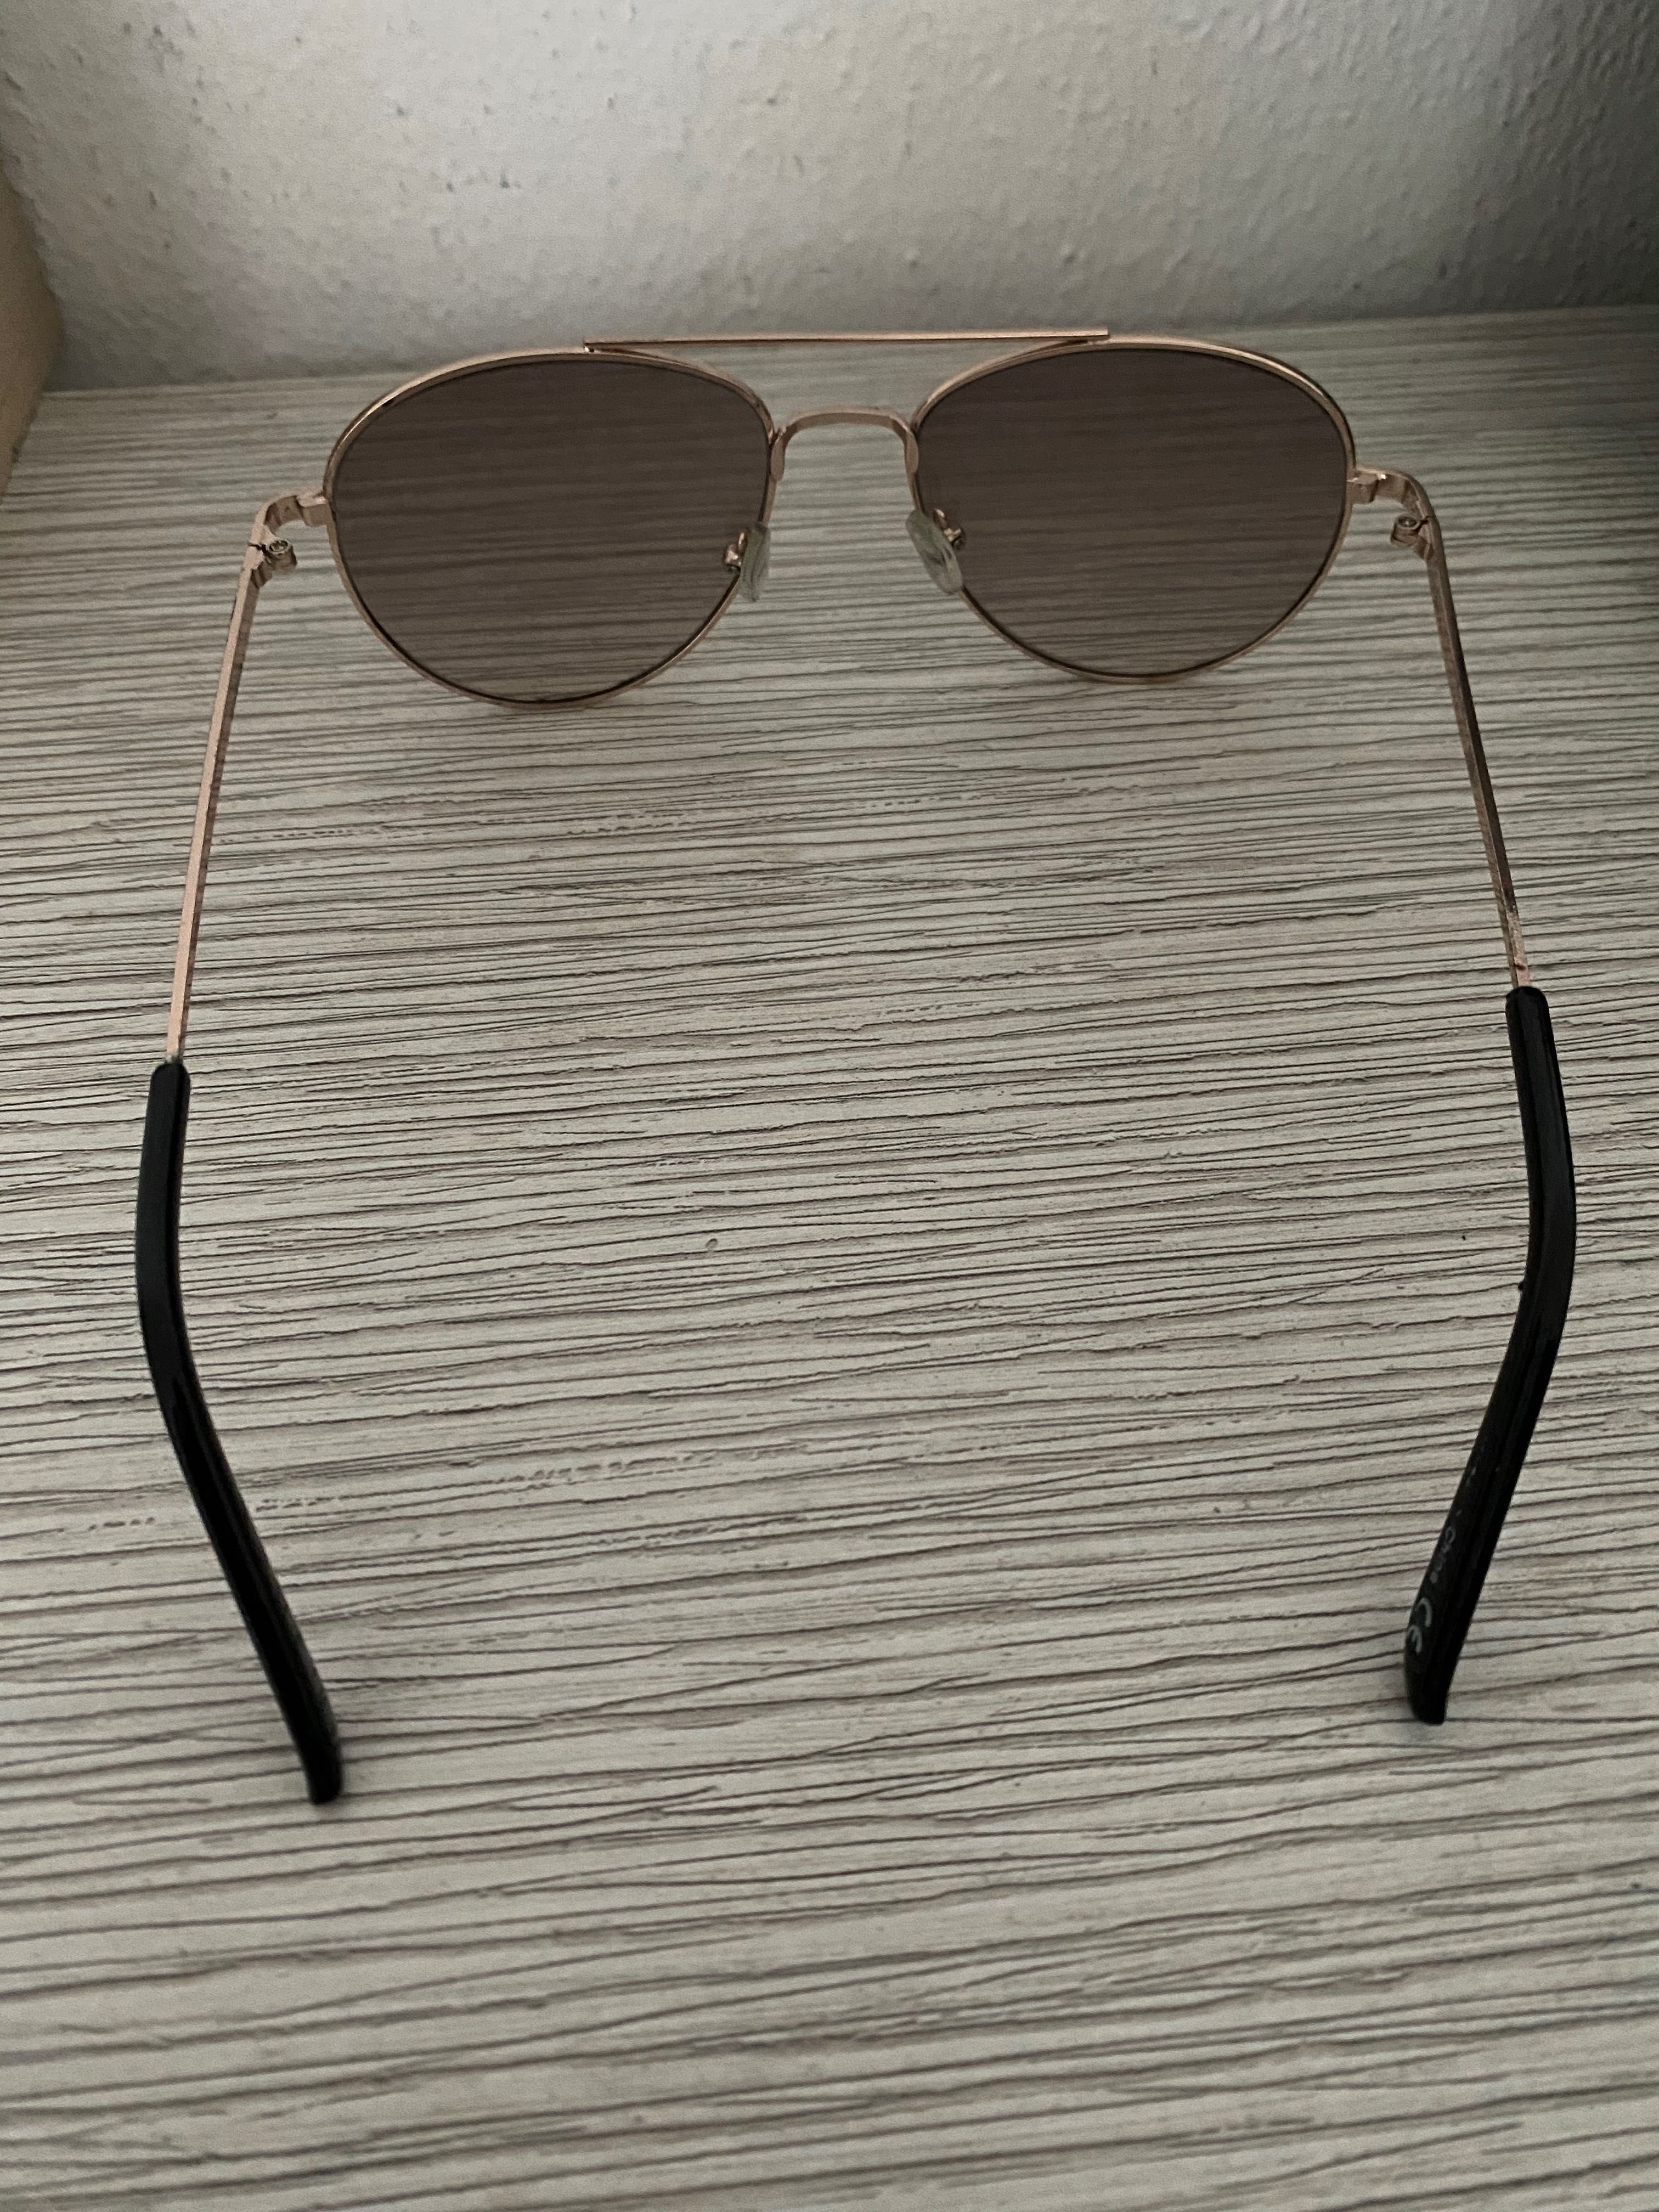 Унисекс слънчеви очила